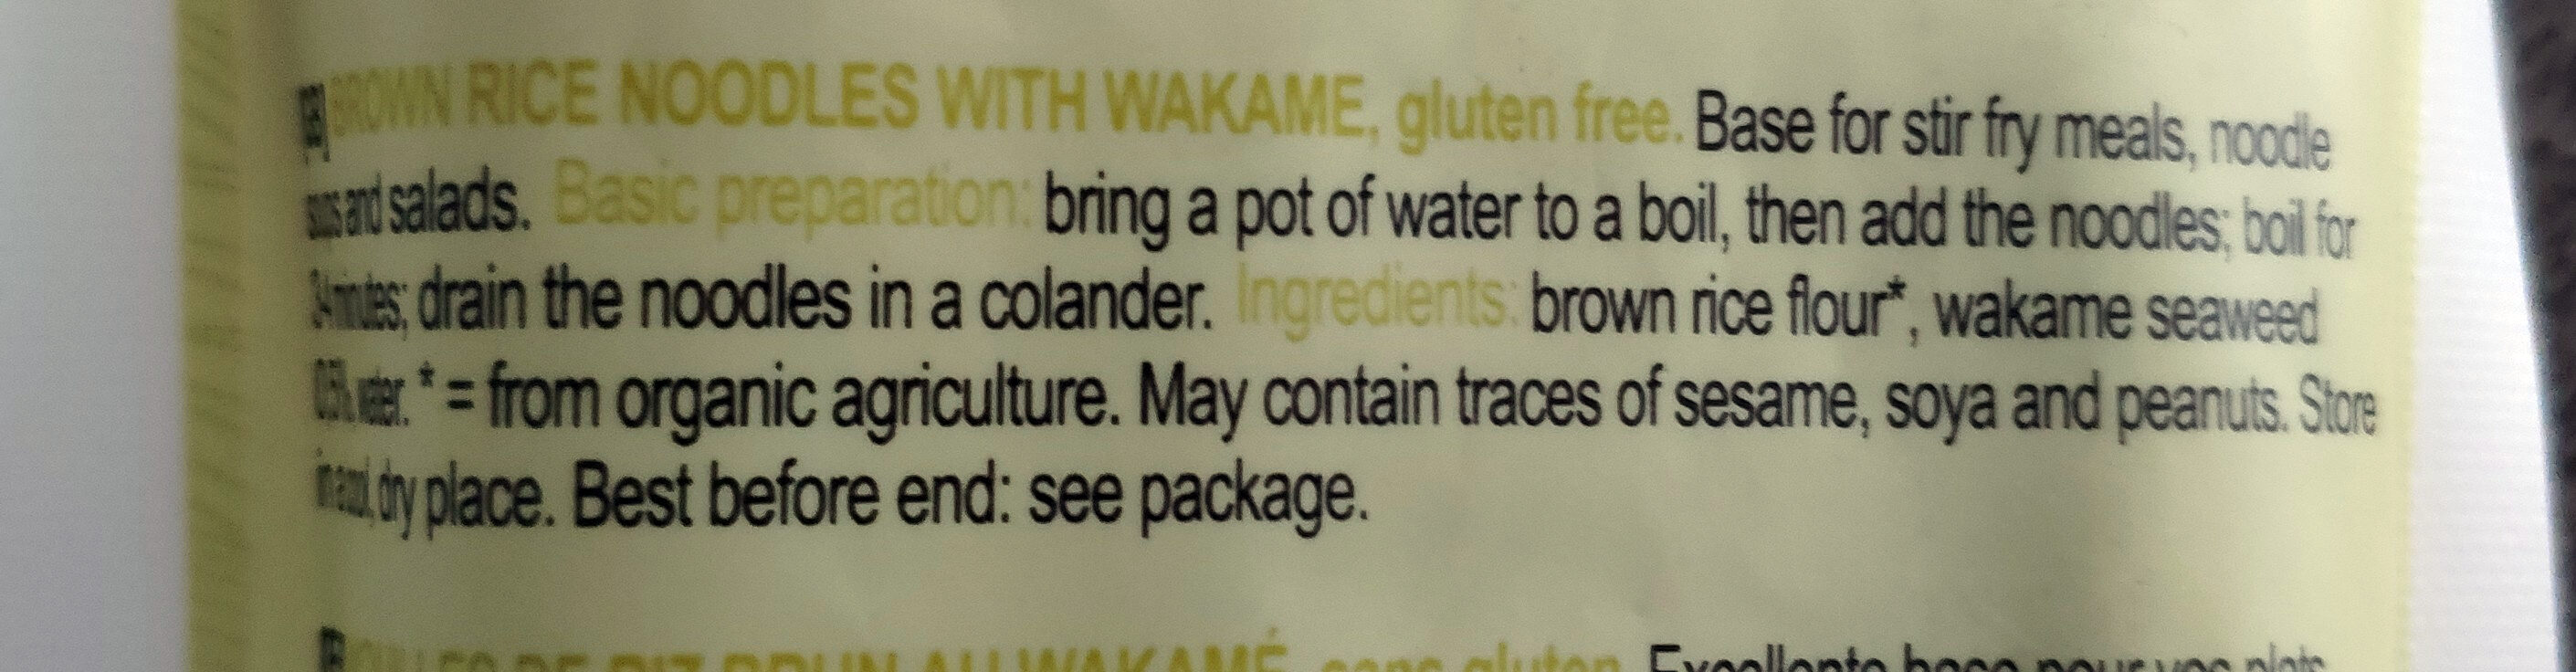 Nouilles de riz brun au wakame sans gluten - Ingredients - en